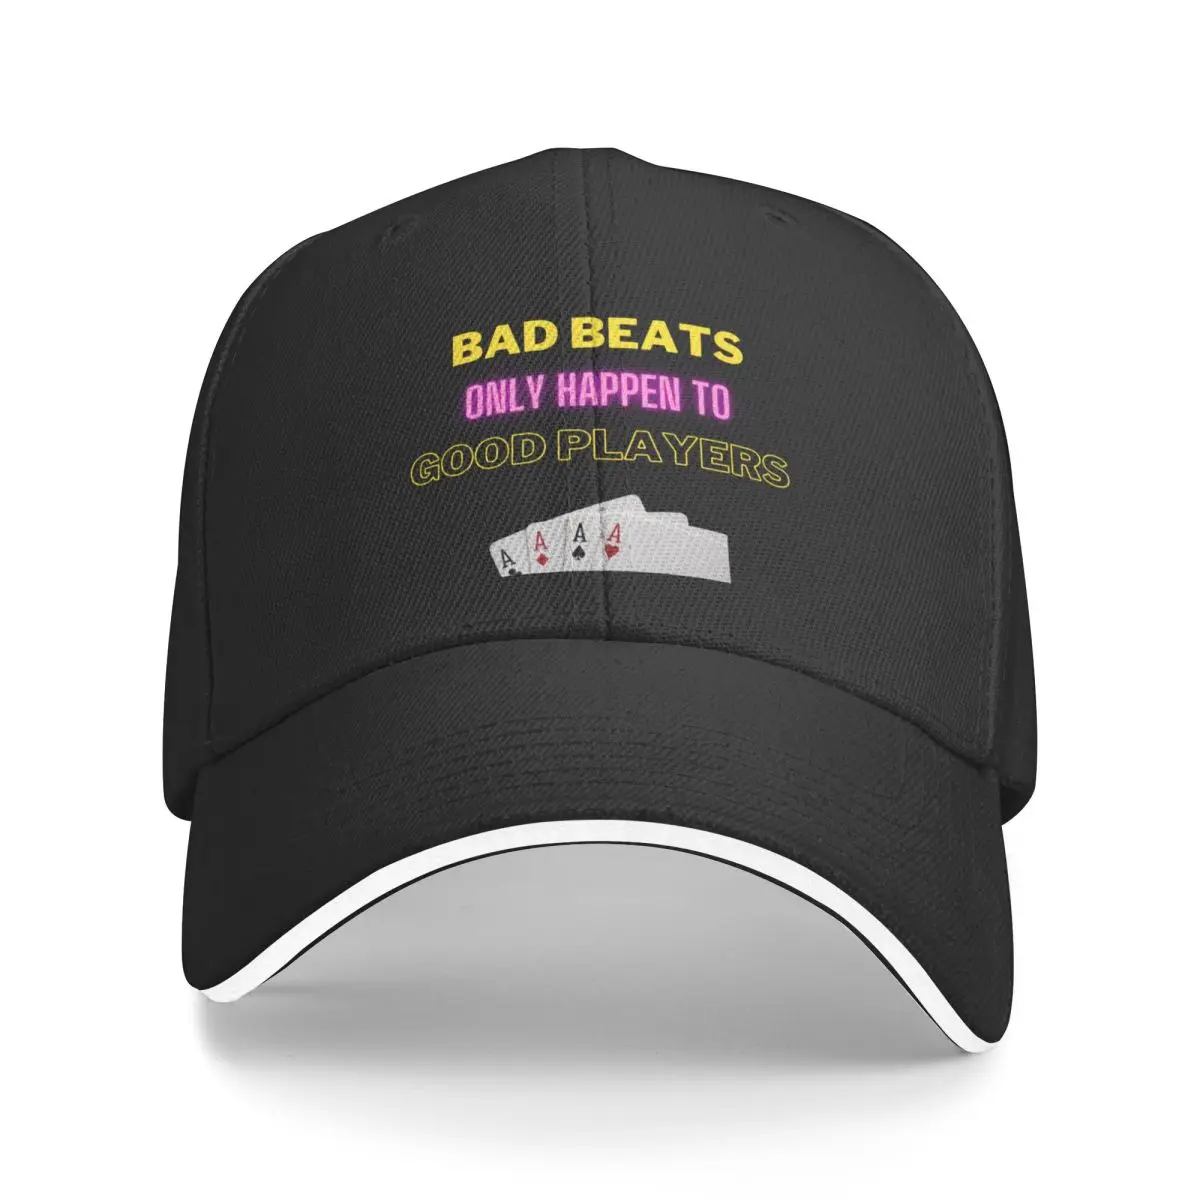 

New Bad beats only happen to good players Baseball Cap Wild Ball Hat foam party hats Military Tactical Caps Cap Woman Men's